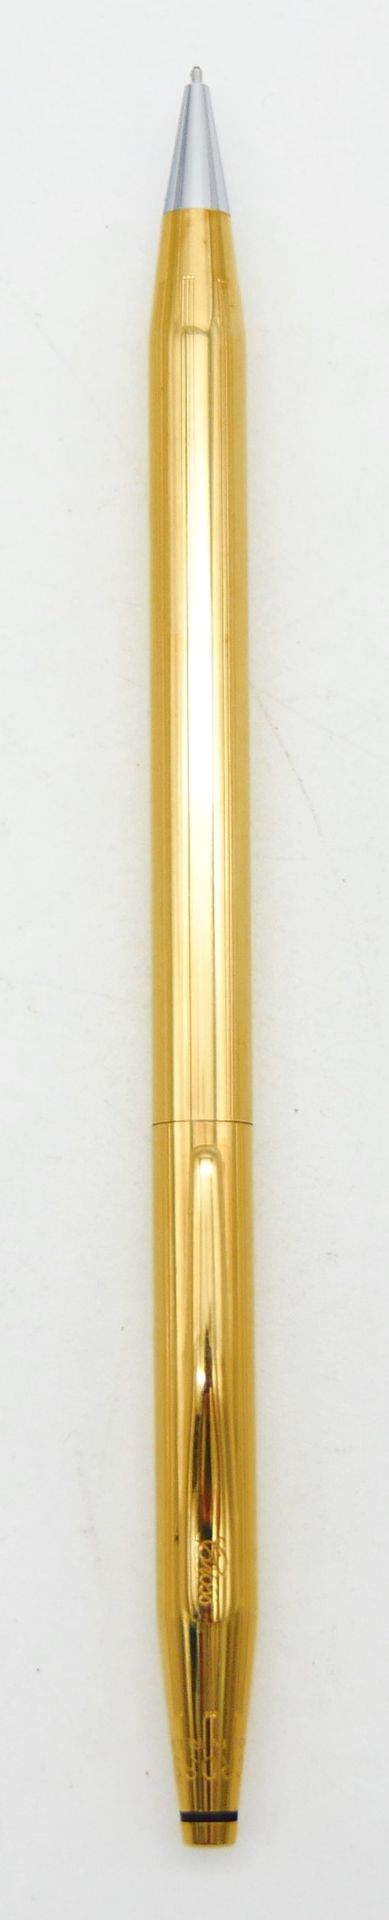 Null 横向

汤森

镀金凹槽金属铅笔

刻有十字架的美国

长：13.5厘米，5.5英寸。

文件和盒子



状况良好